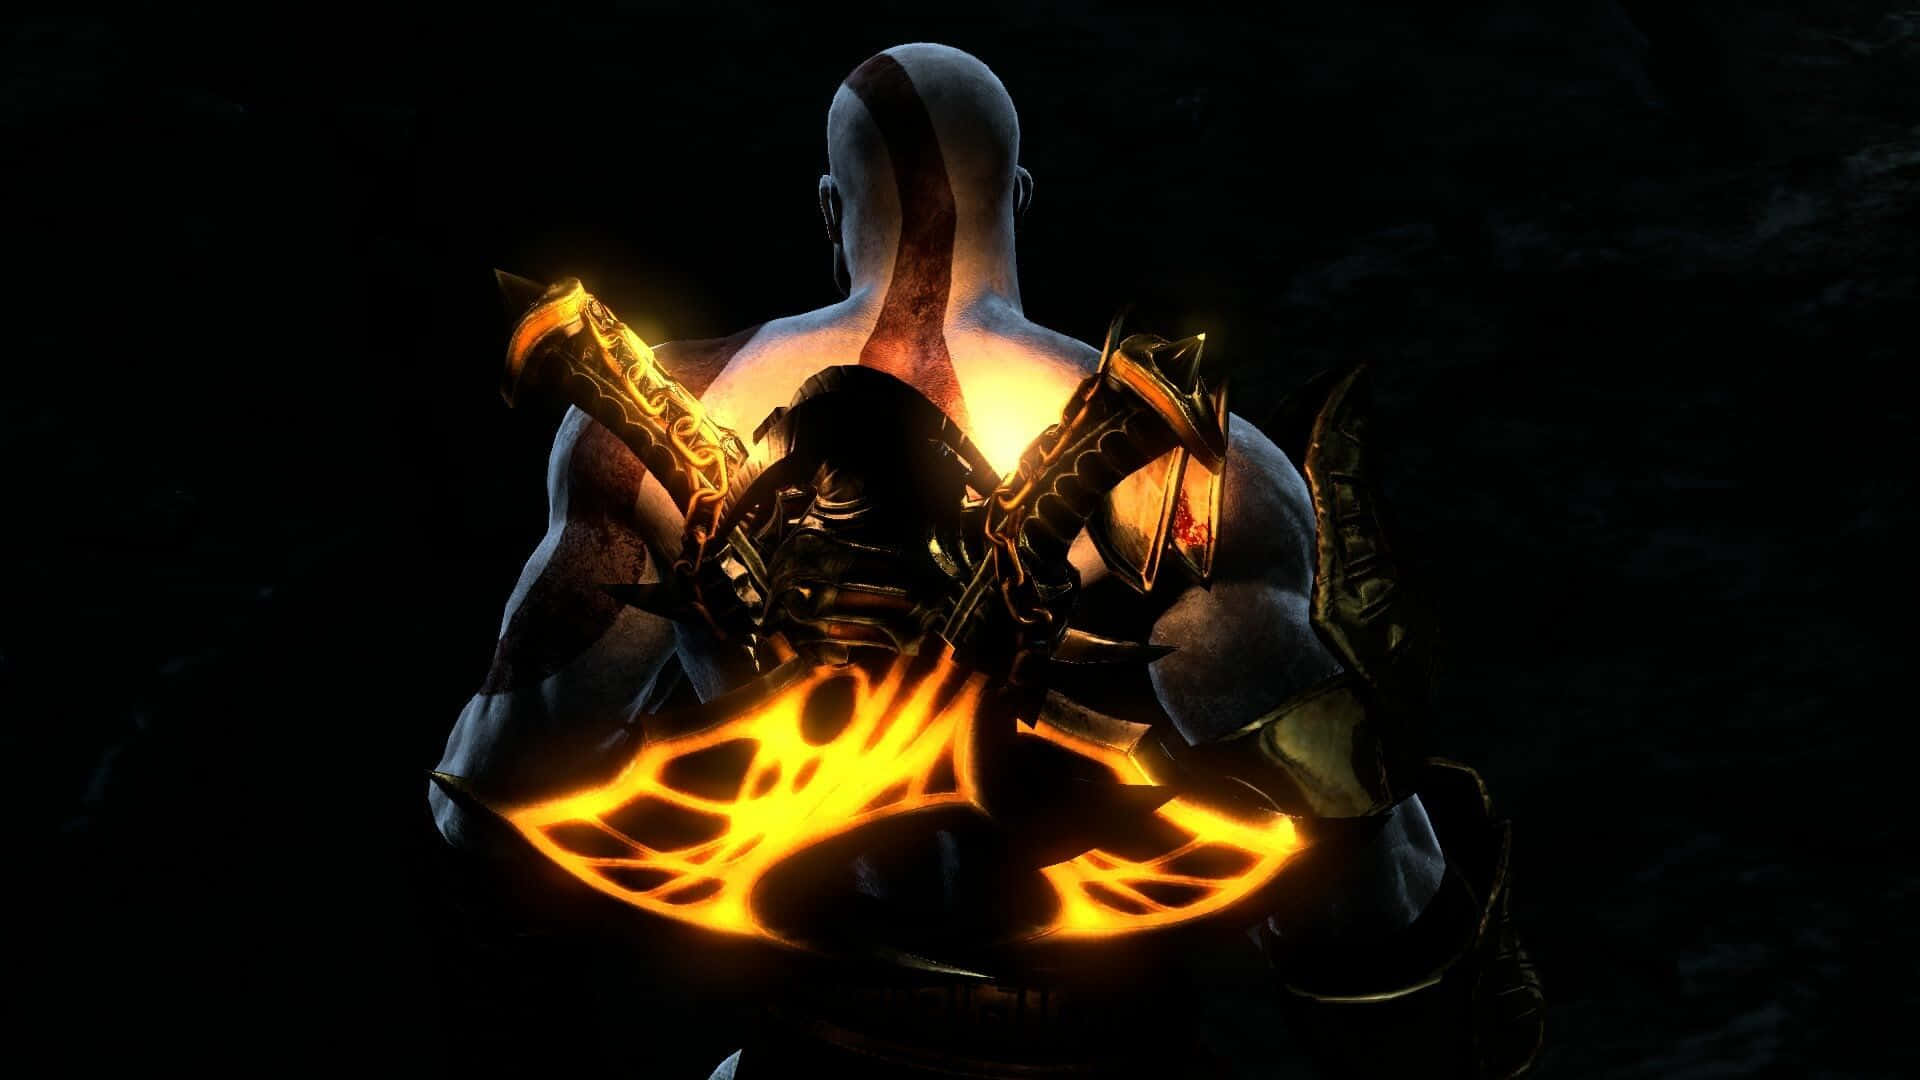 Kratos battles Ares in the God of War III video game Wallpaper